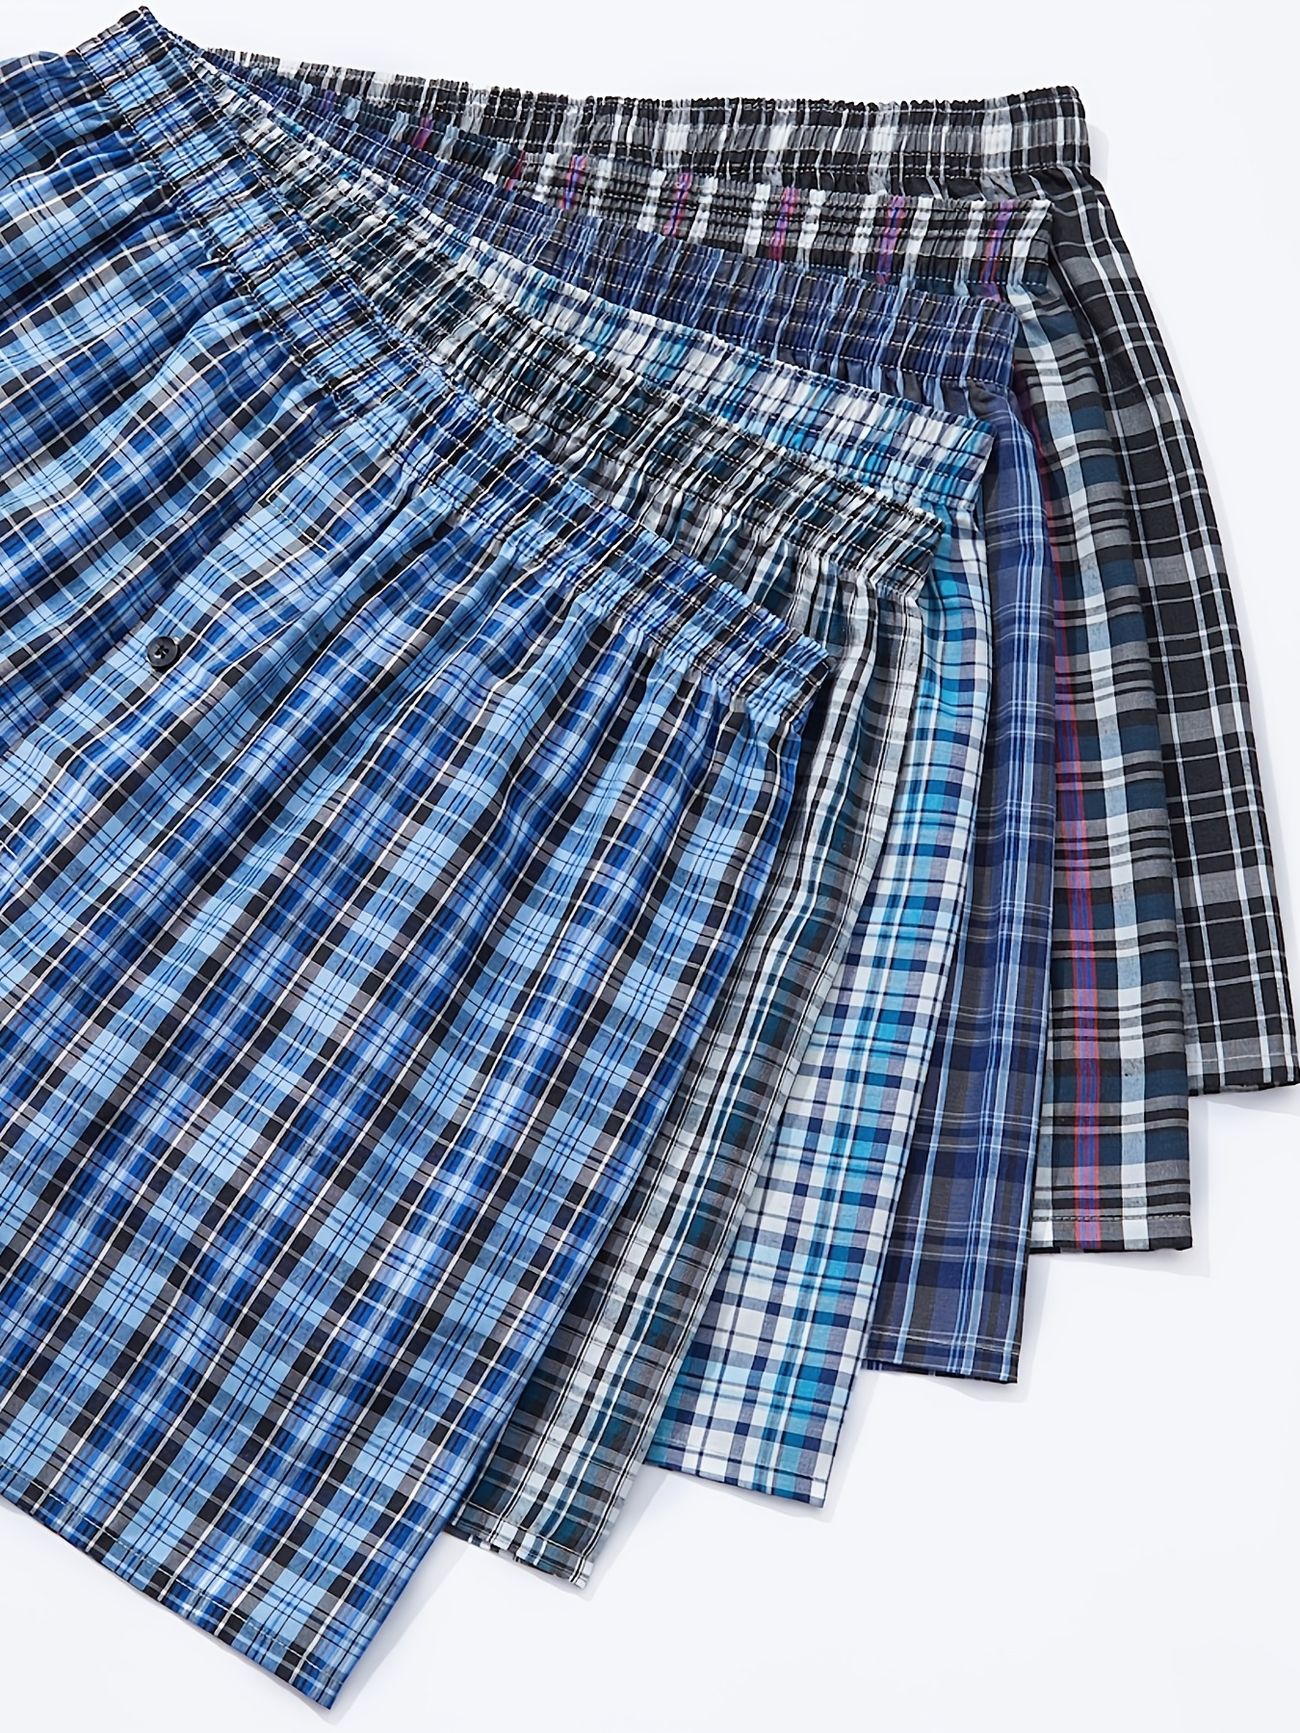 jupitersecret 6pairs casual plaid elastic waistband button boxer shorts mens boxer underwear mixed color